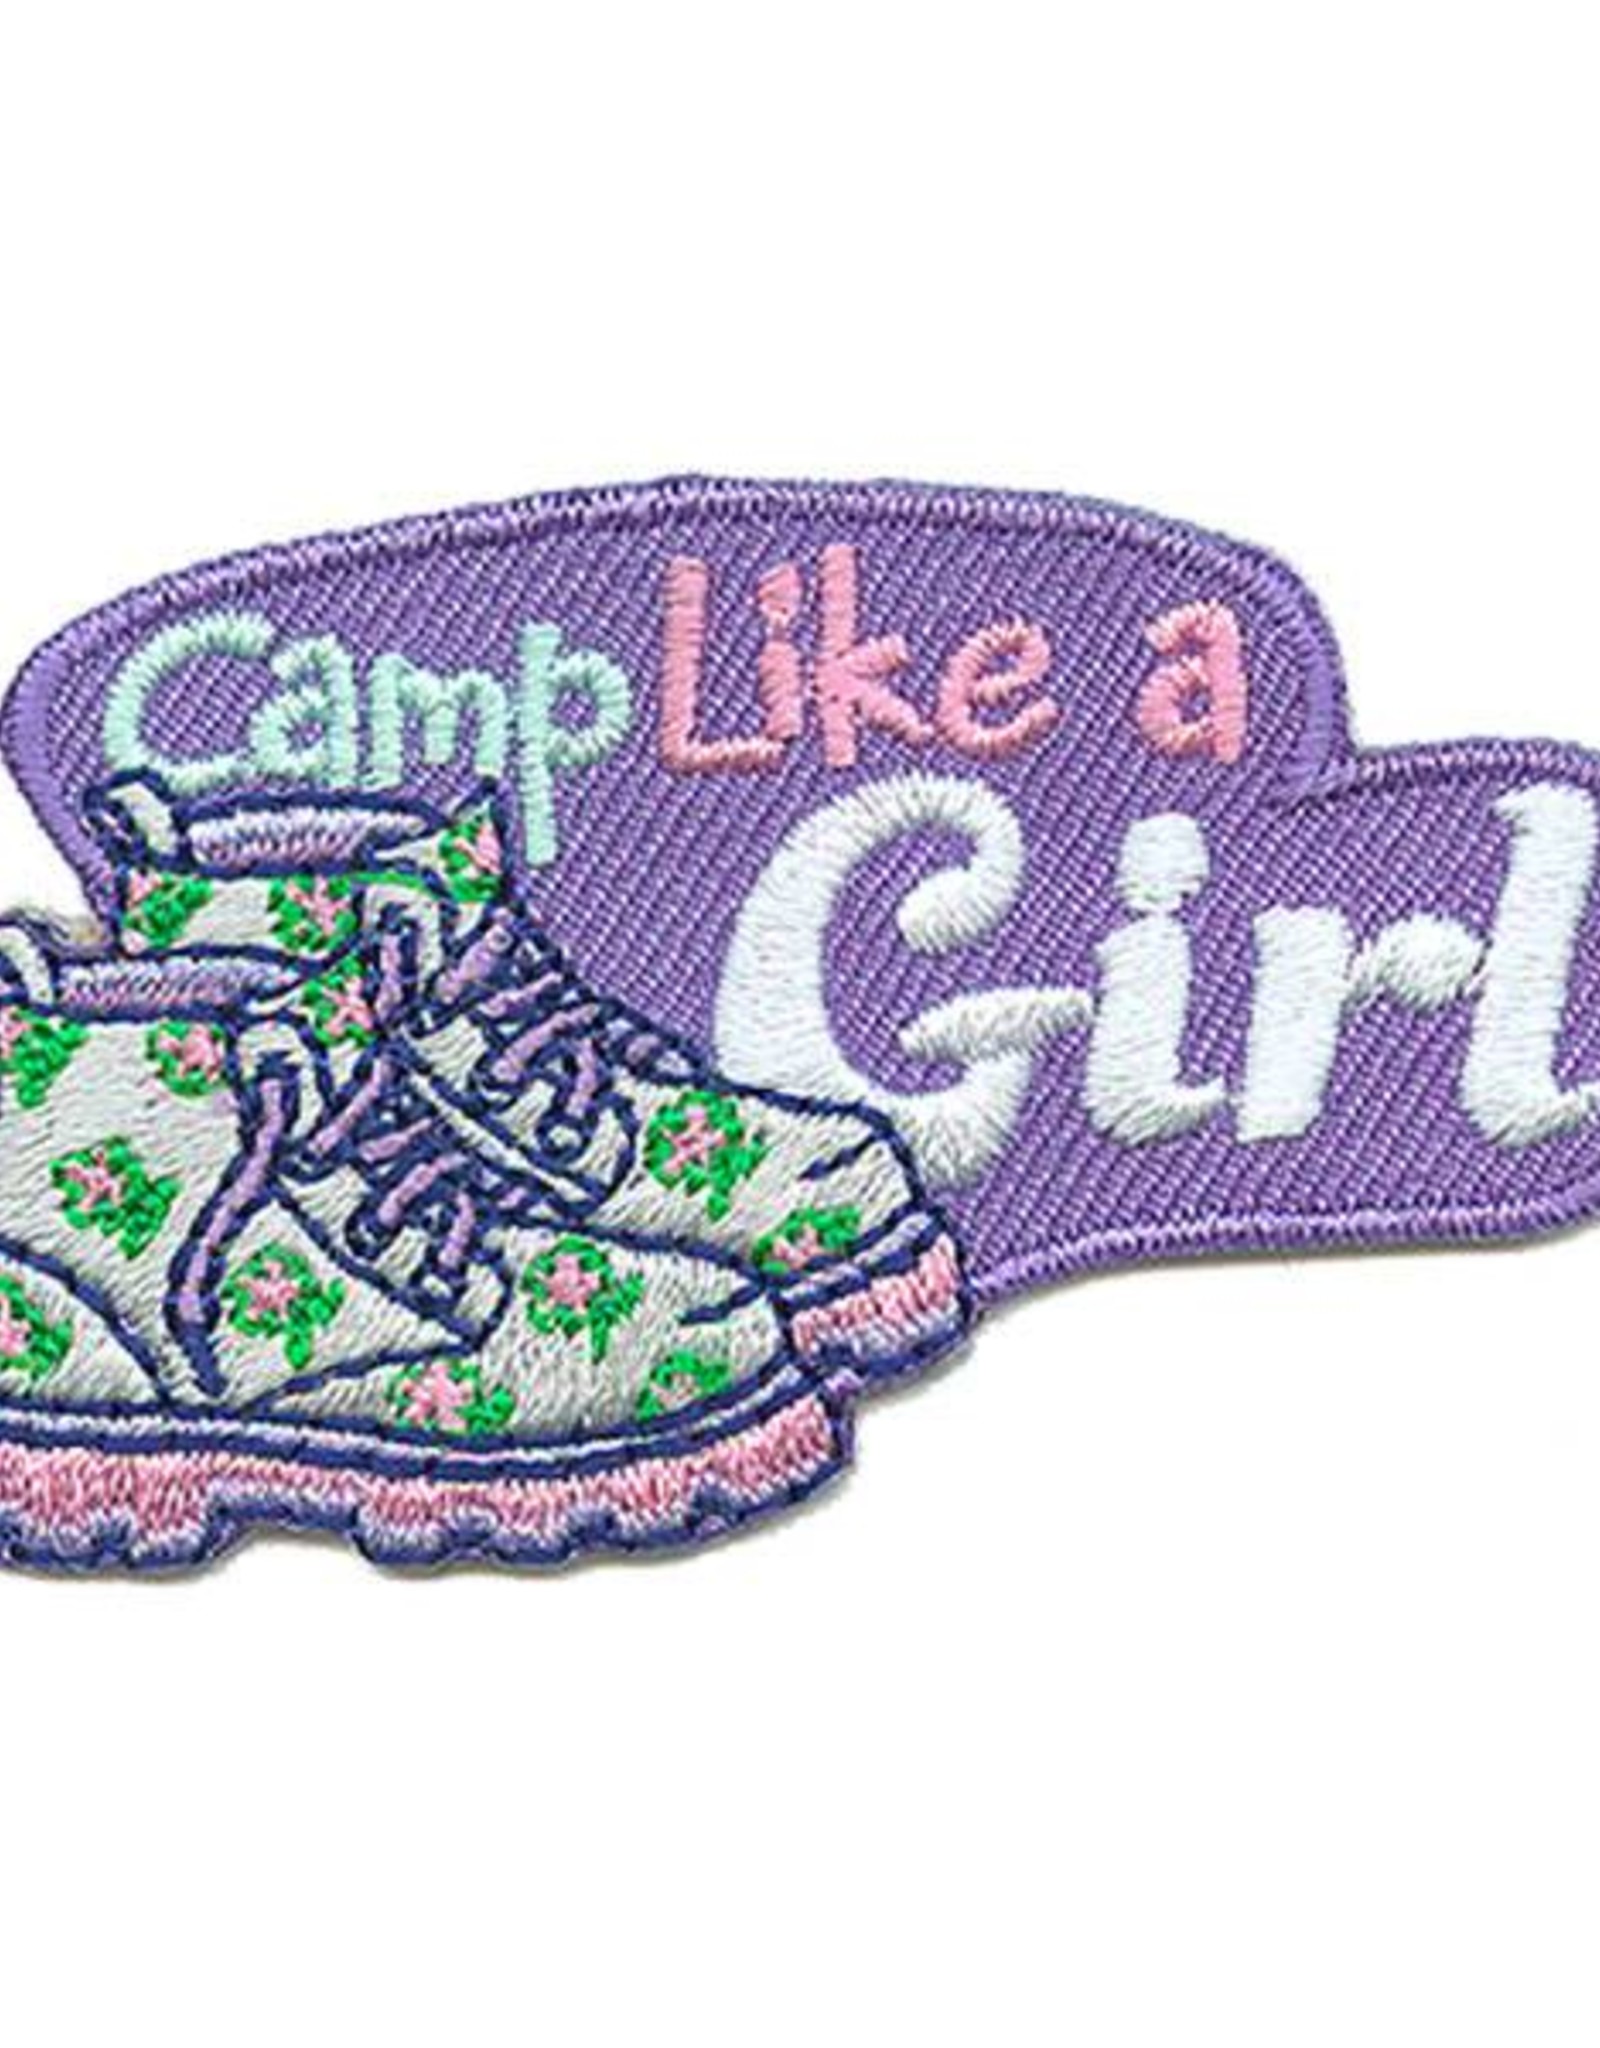 Advantage Emblem & Screen Prnt *Camp Like a Girl Boots Fun Patch